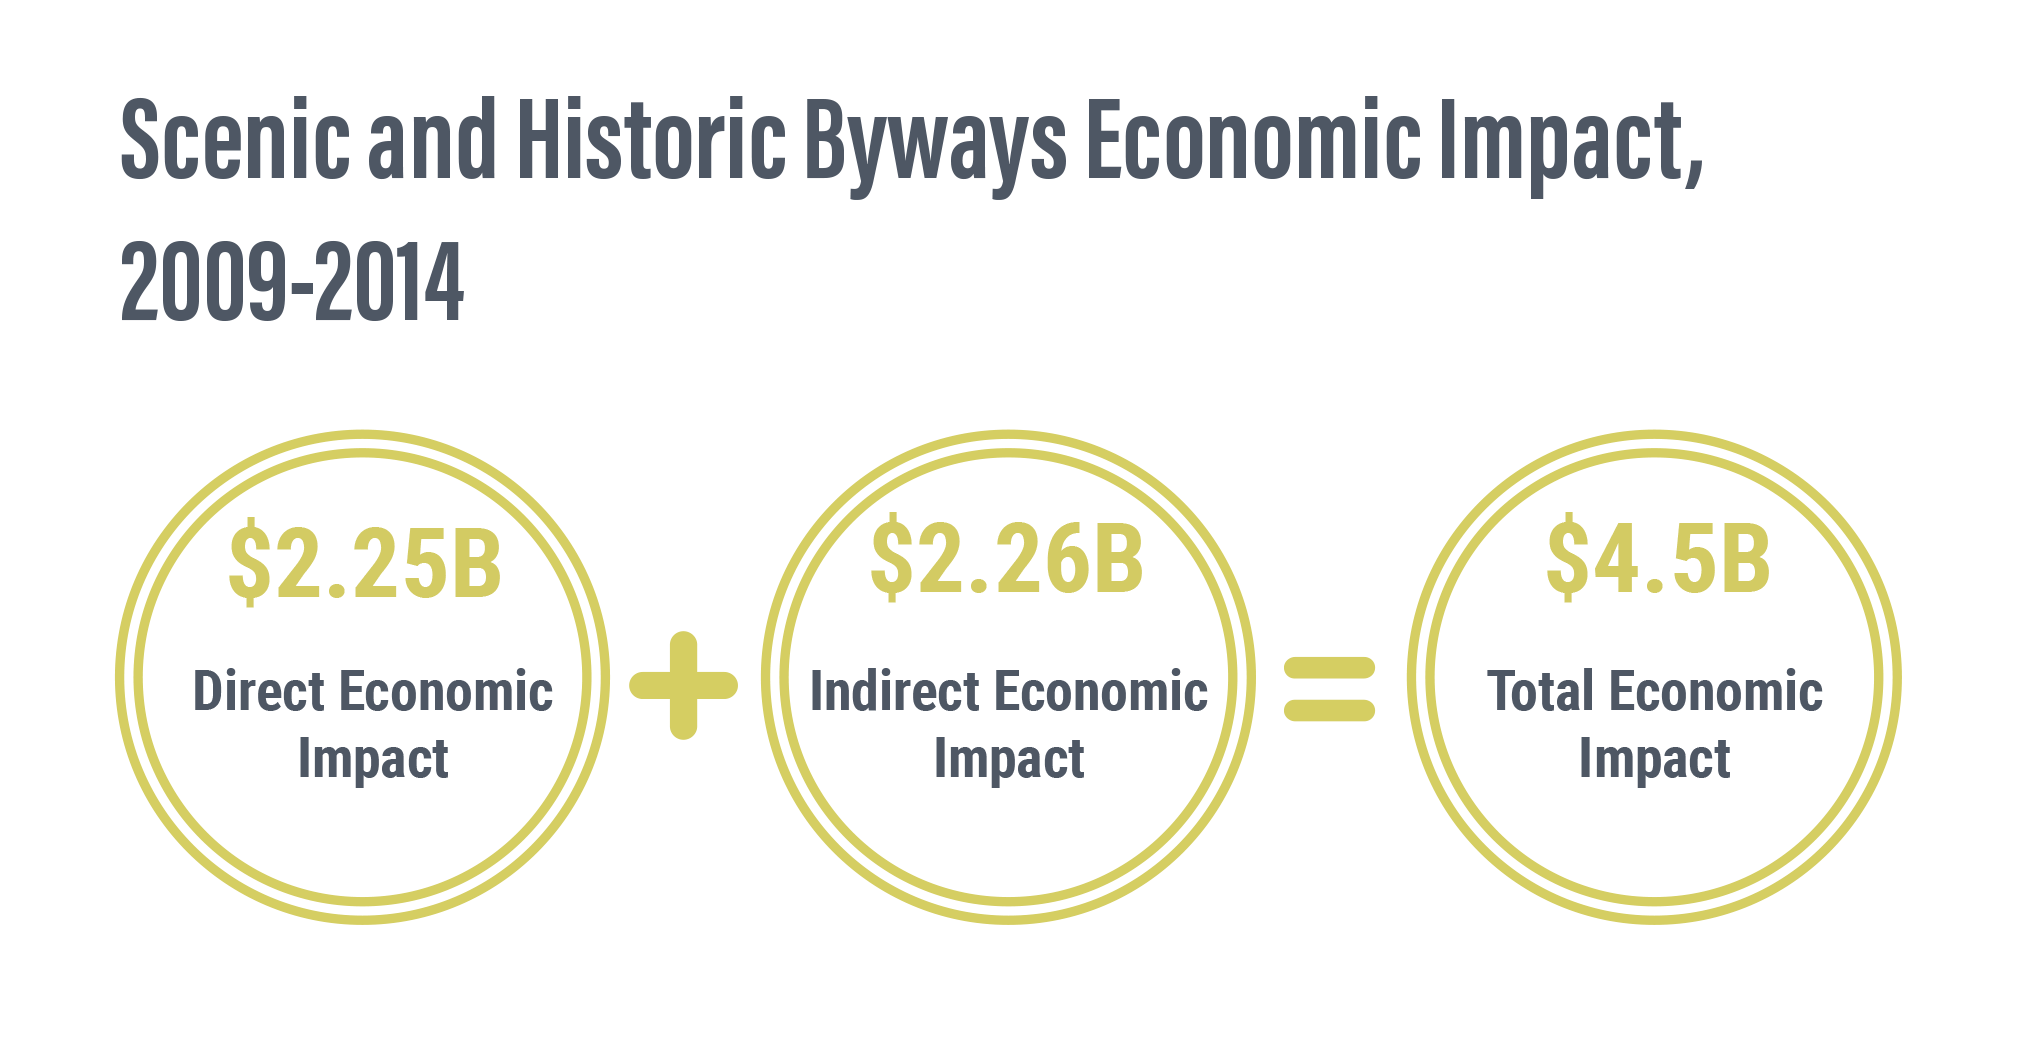 Scenic and Historic Byways Economic Impact, 2019-2014